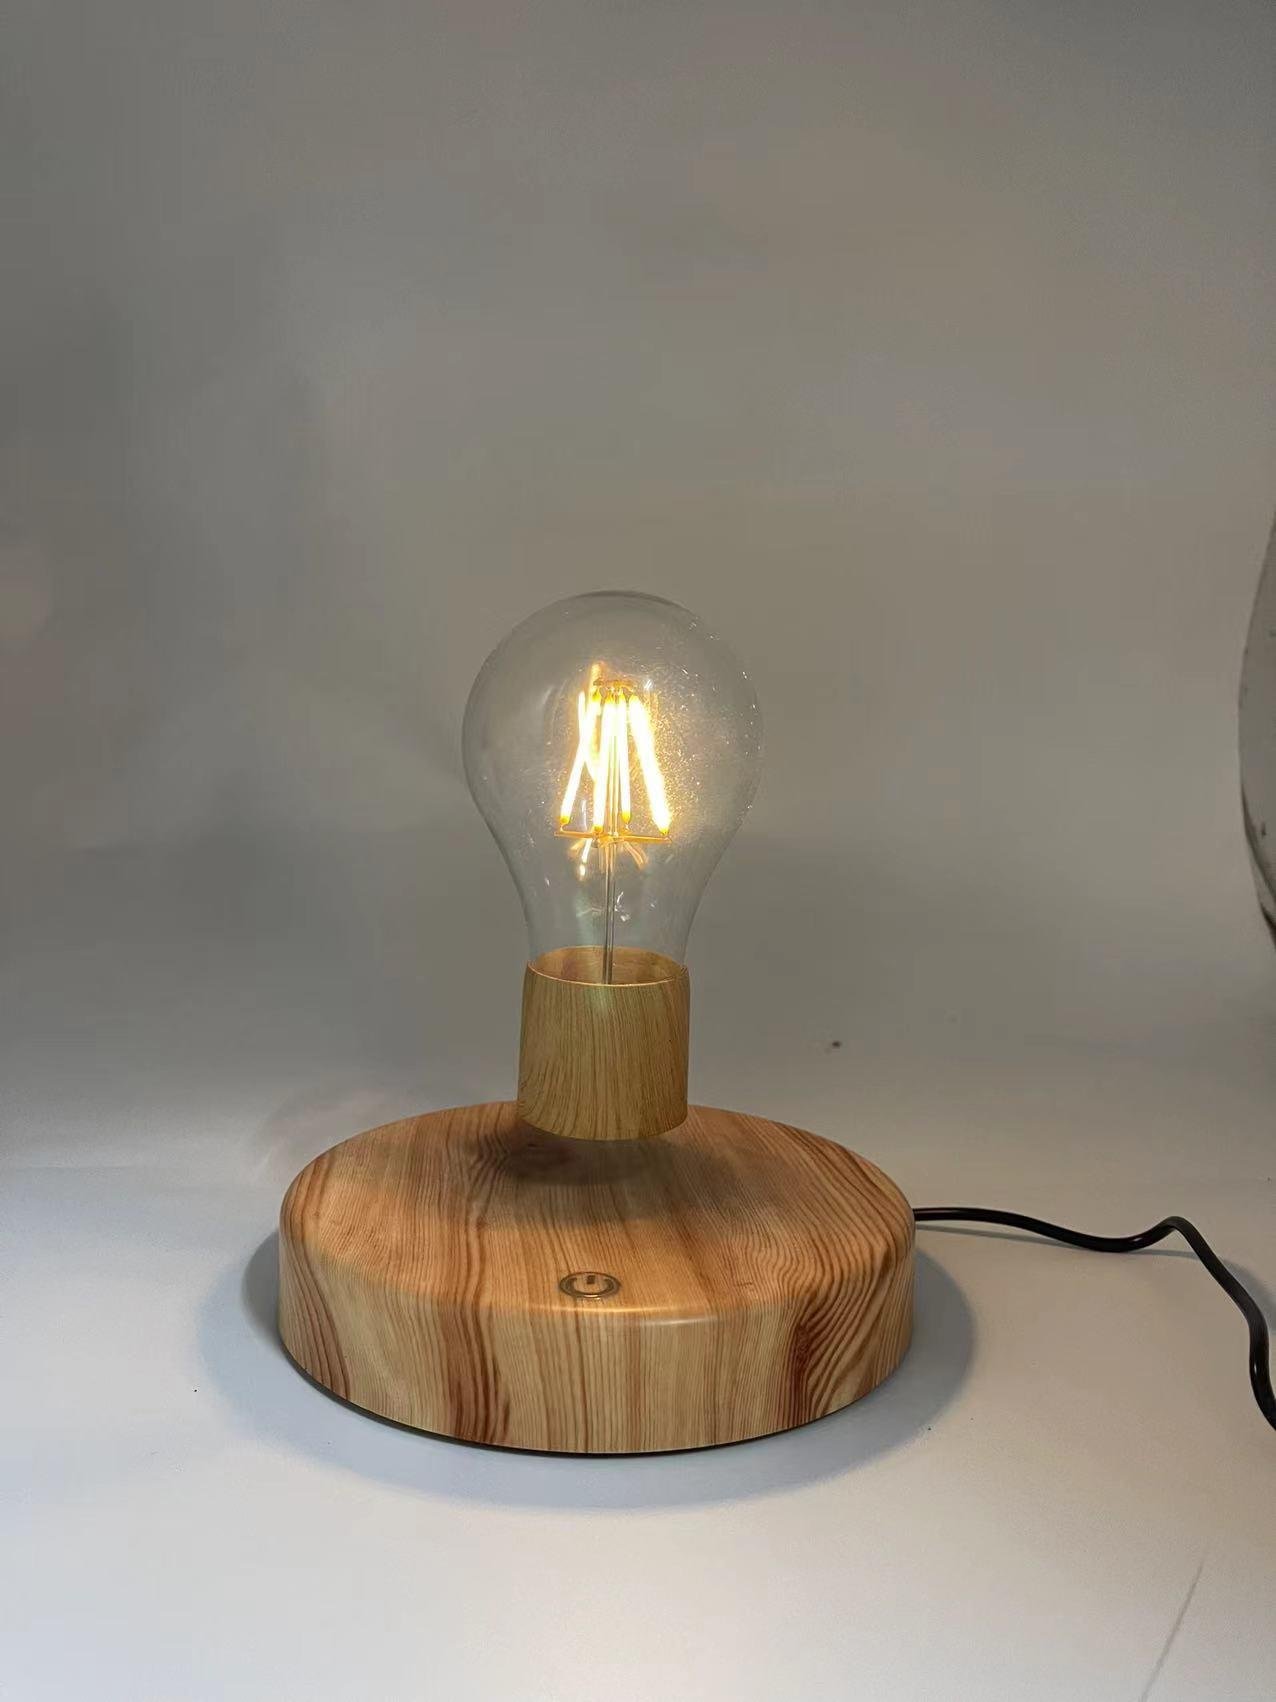 Levitating lamp Magnetic Levitating Lamp Floating Led Light Bulb Home Decor Gift 4